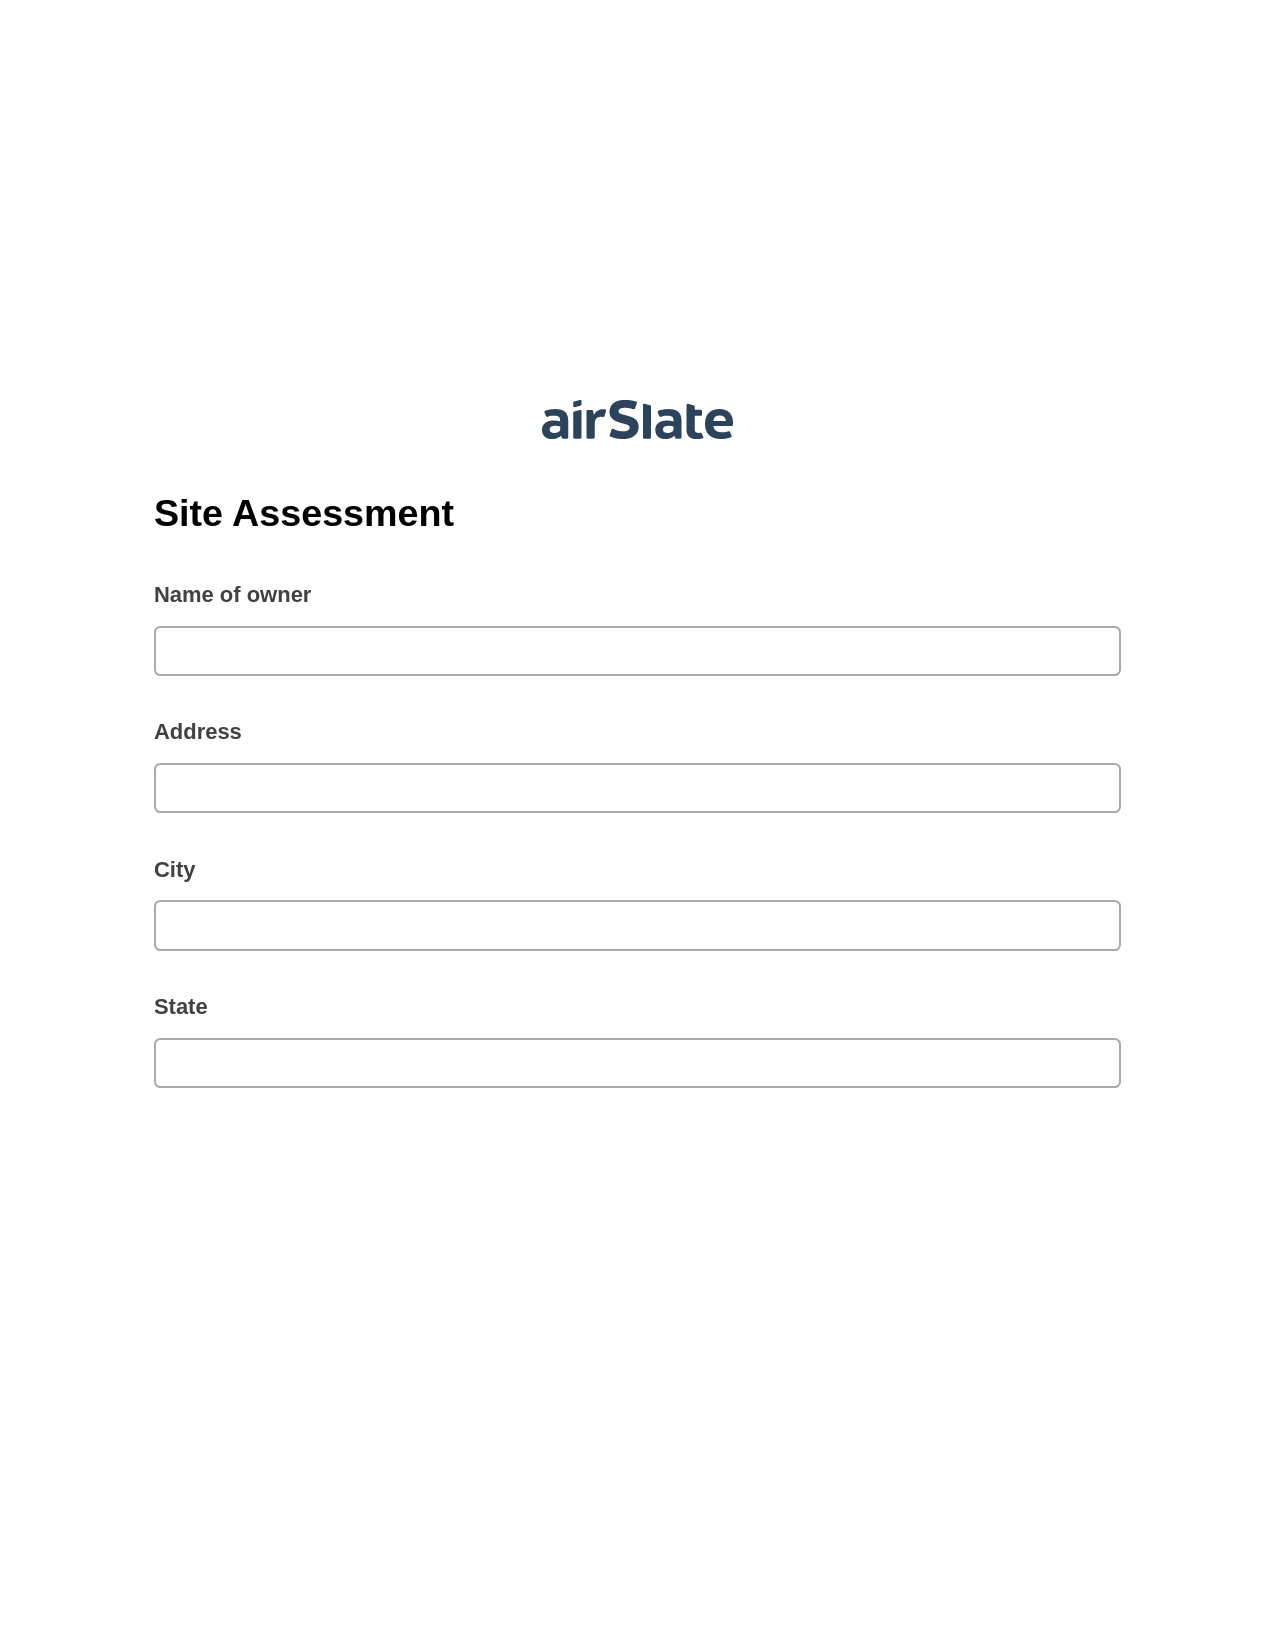 Multirole Site Assessment Pre-fill from Google Sheets Bot, Google Cloud Print Bot, Archive to SharePoint Folder Bot